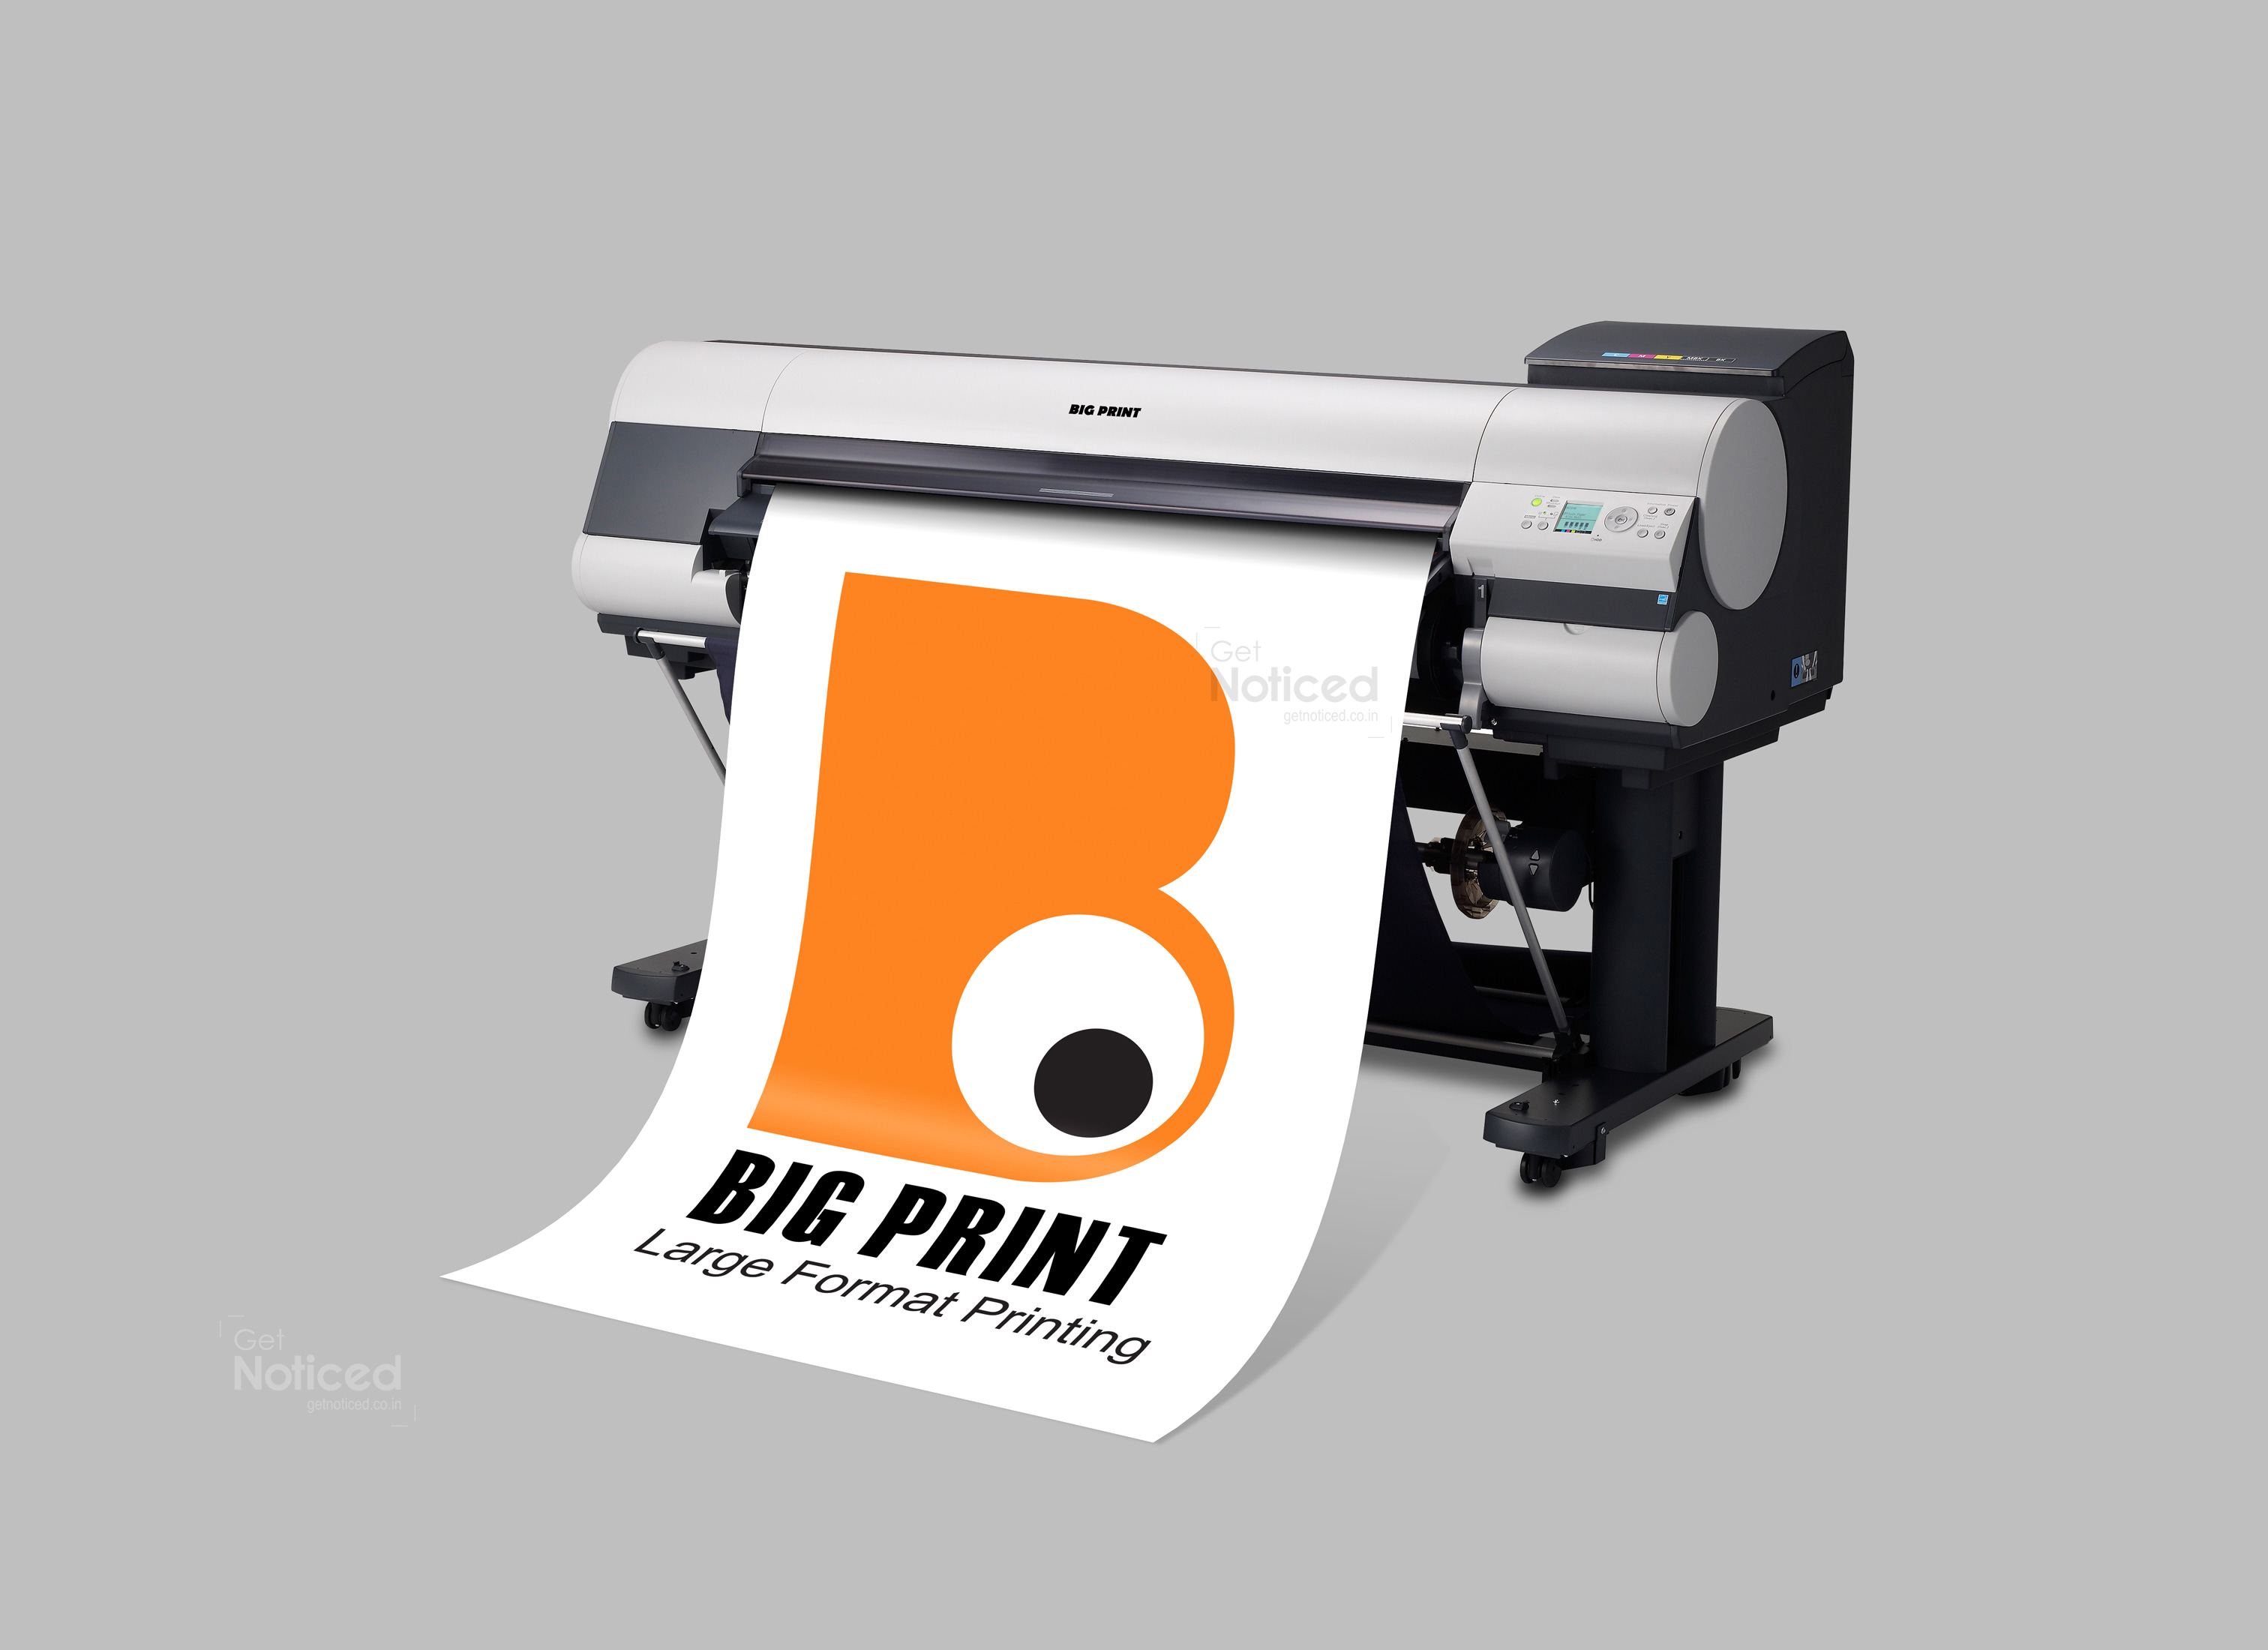 Big Print Logo Design